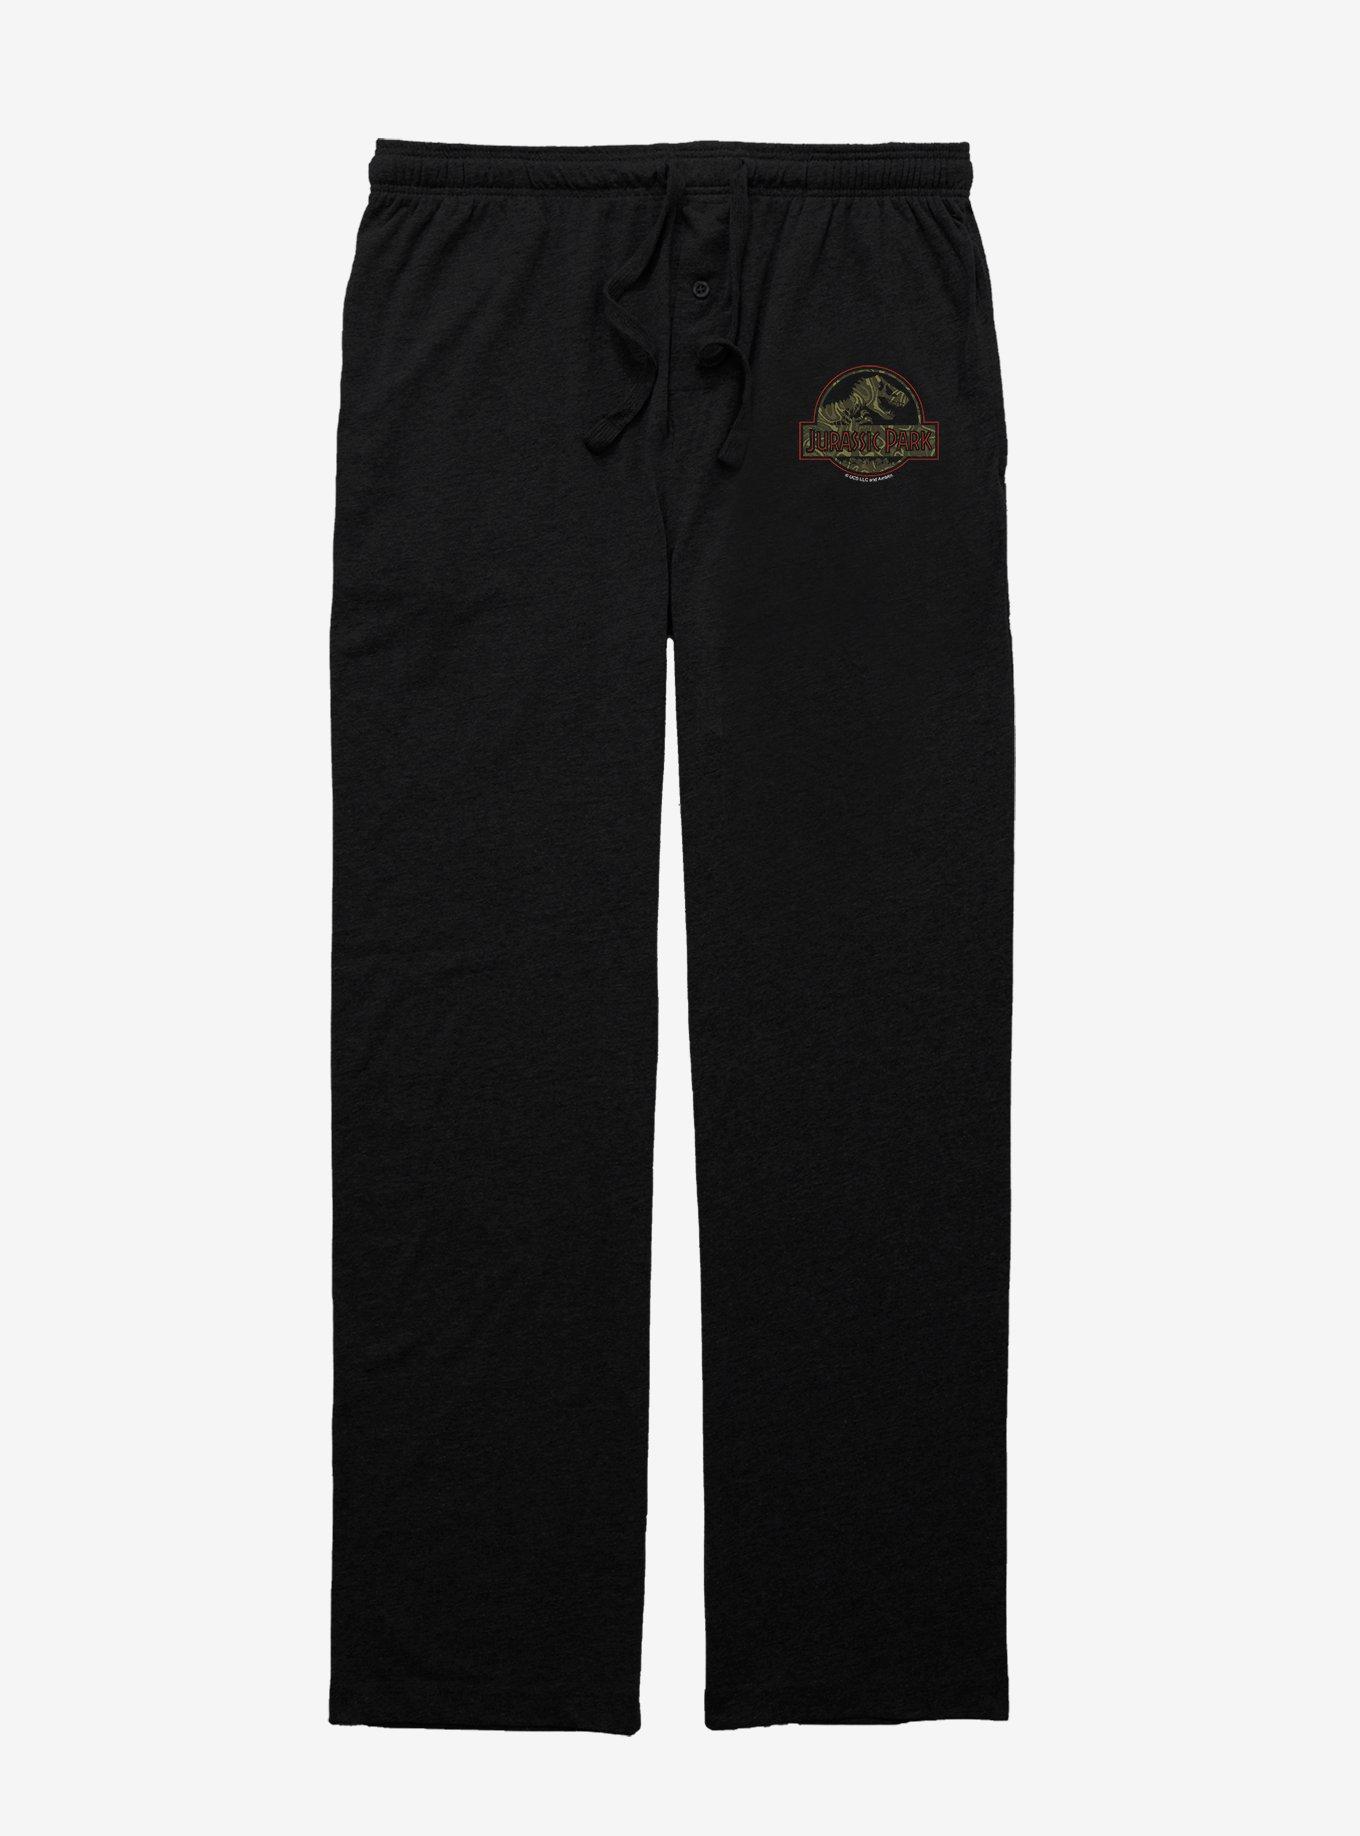 Jurassic Park Camo Logo Pajama Pants